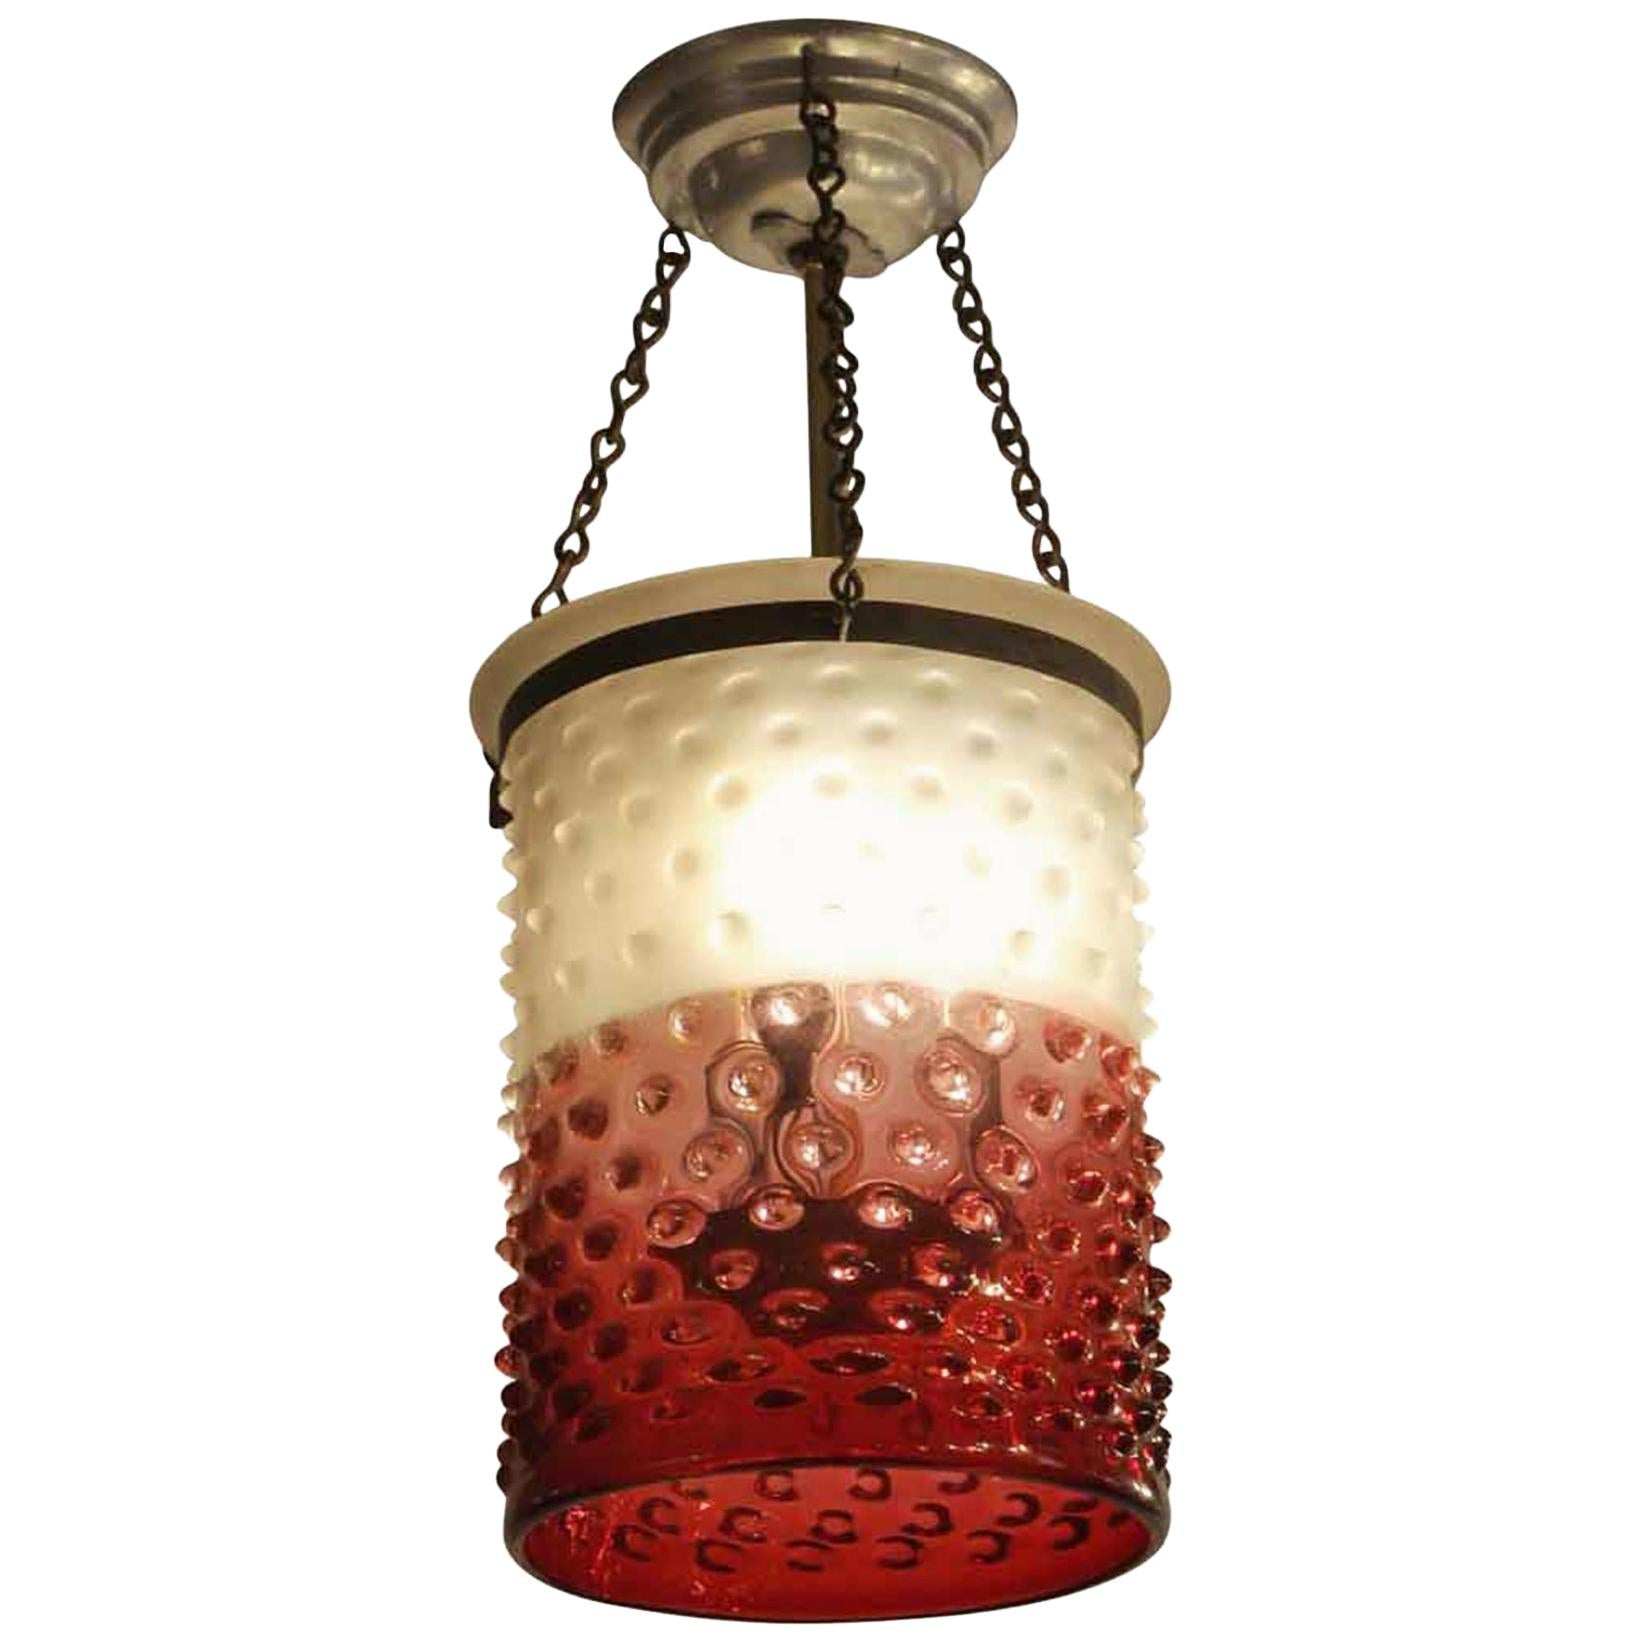 1930s Cranberry Glass Drum Pendant Light with Original Hardware